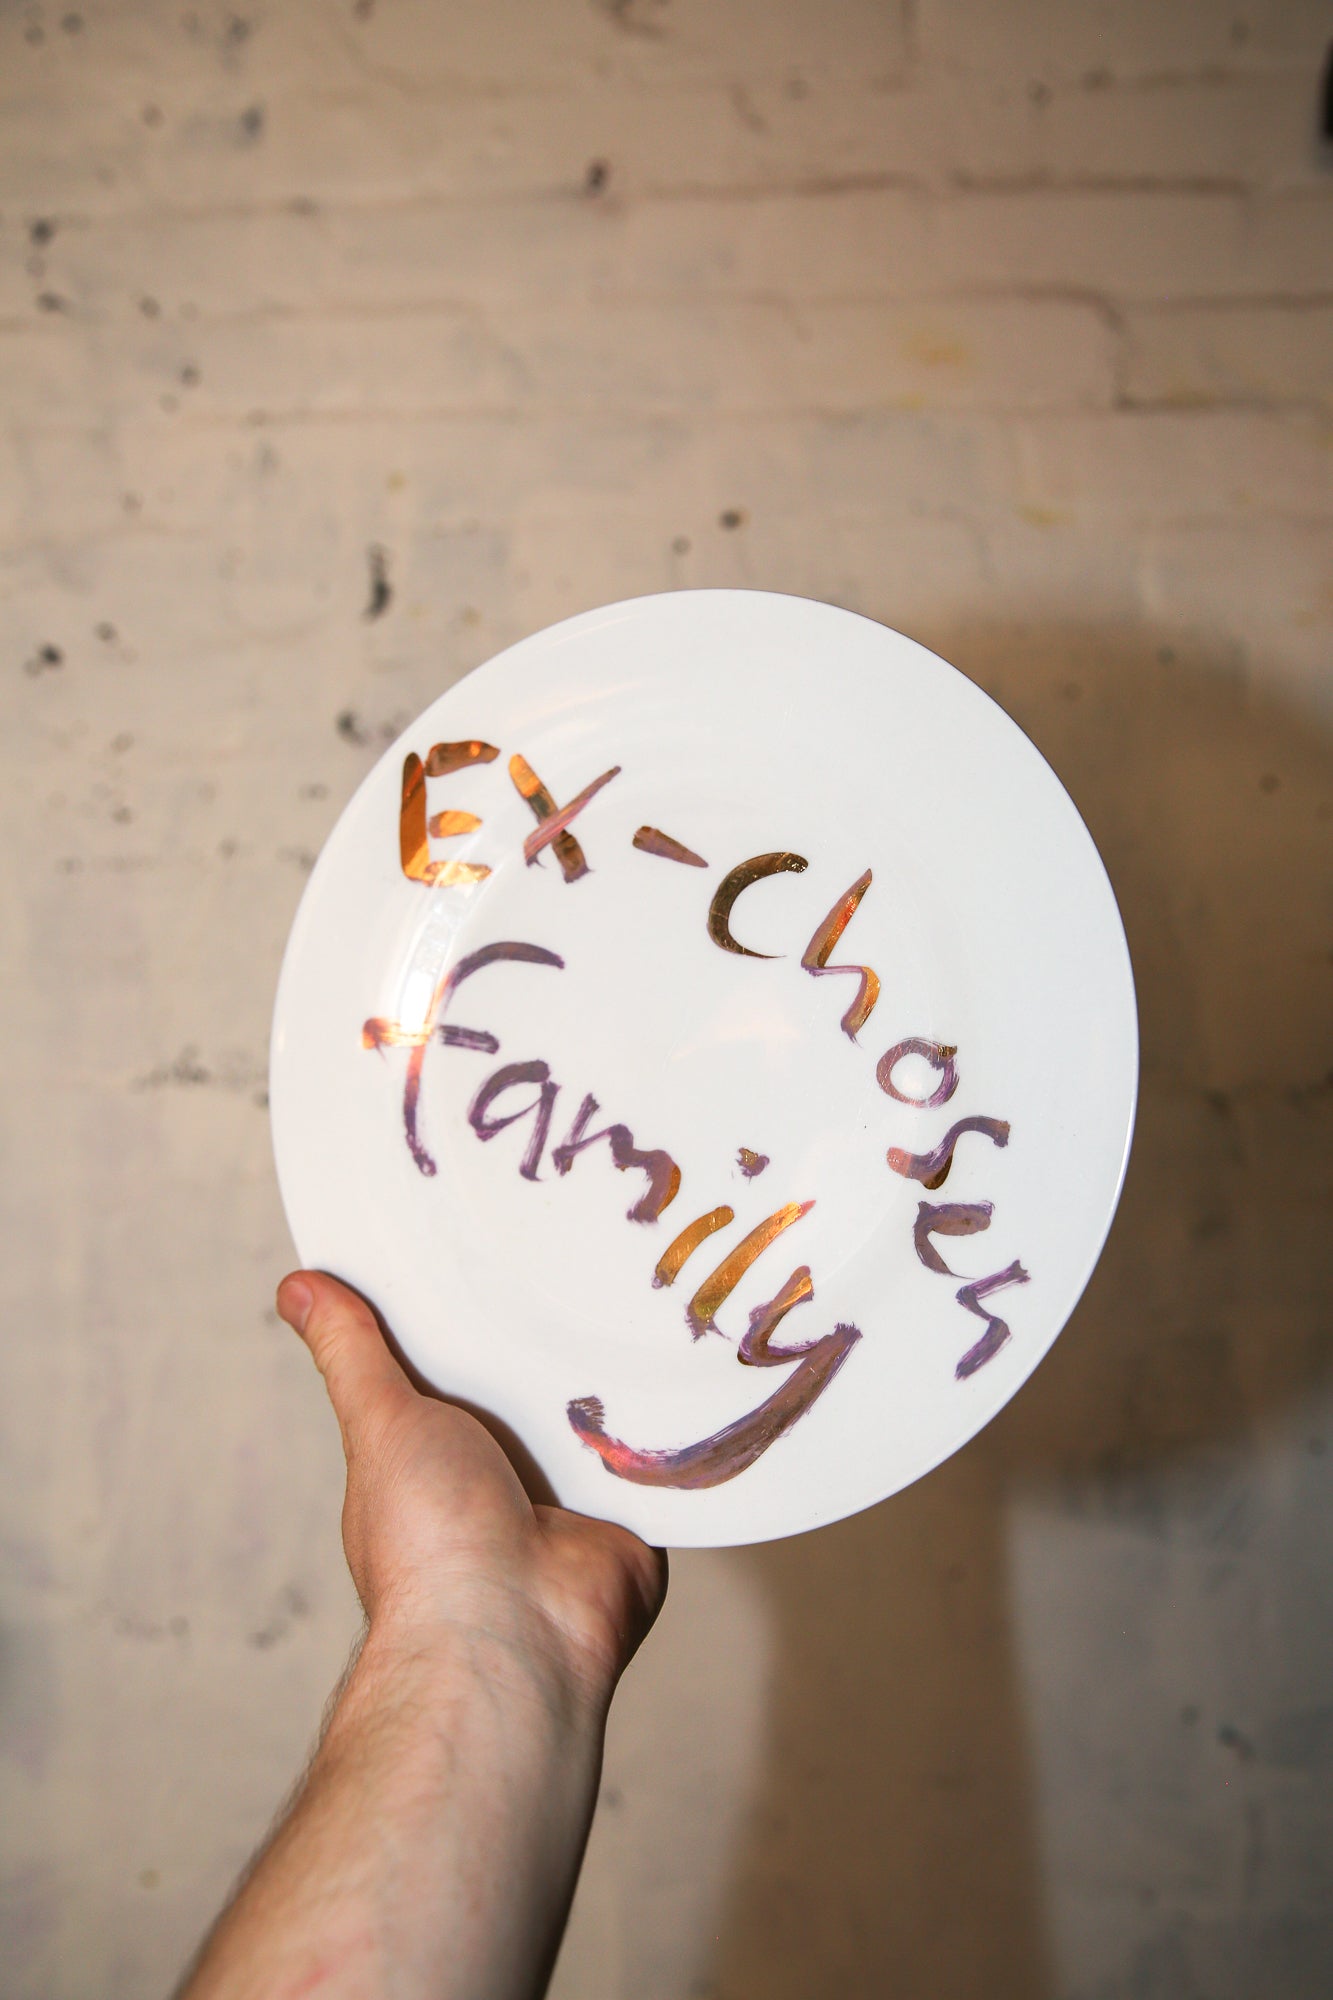 EX-CHOSEN FAMILY